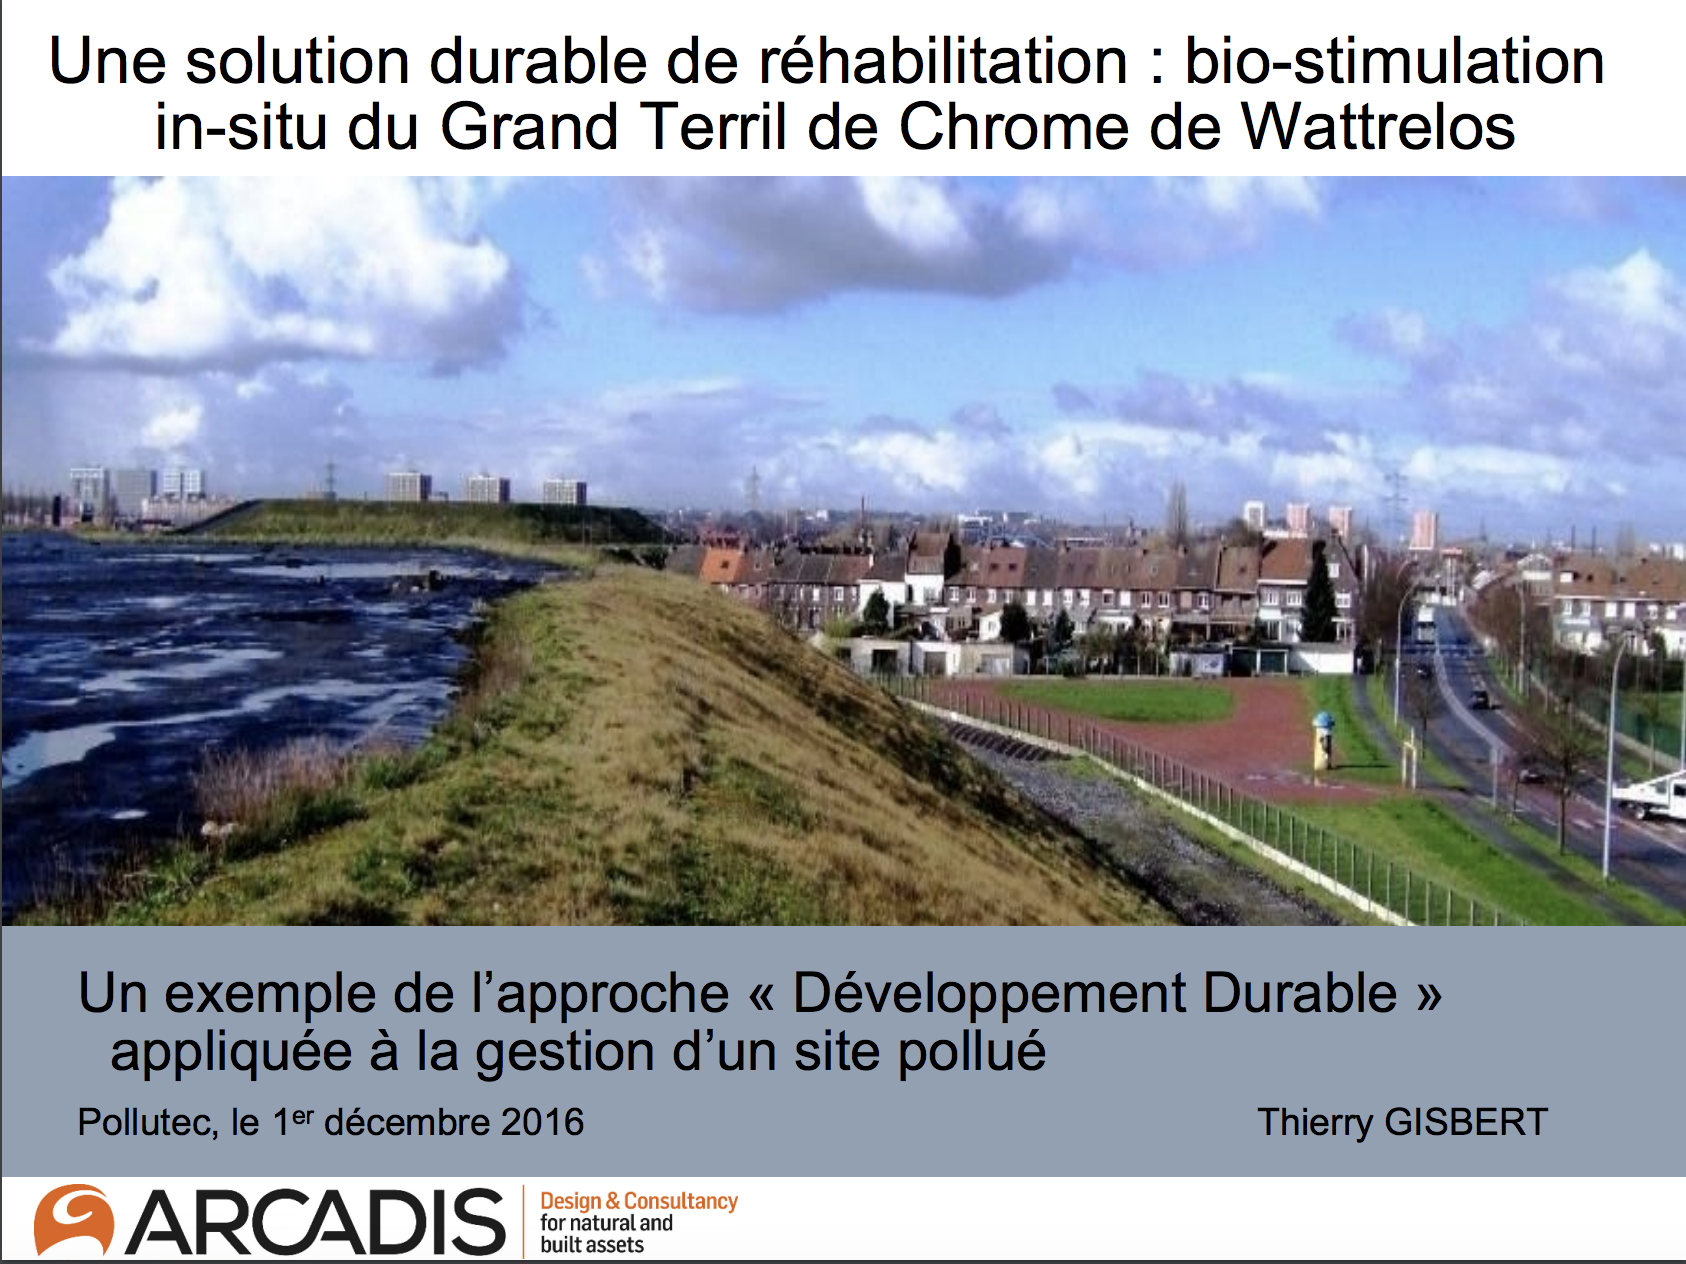 Réhabilitation durable du grand terril de chrome de Wattrelos par la technique de la bio-précipitation in situ - ARCADIS - ARCADIS - 2016